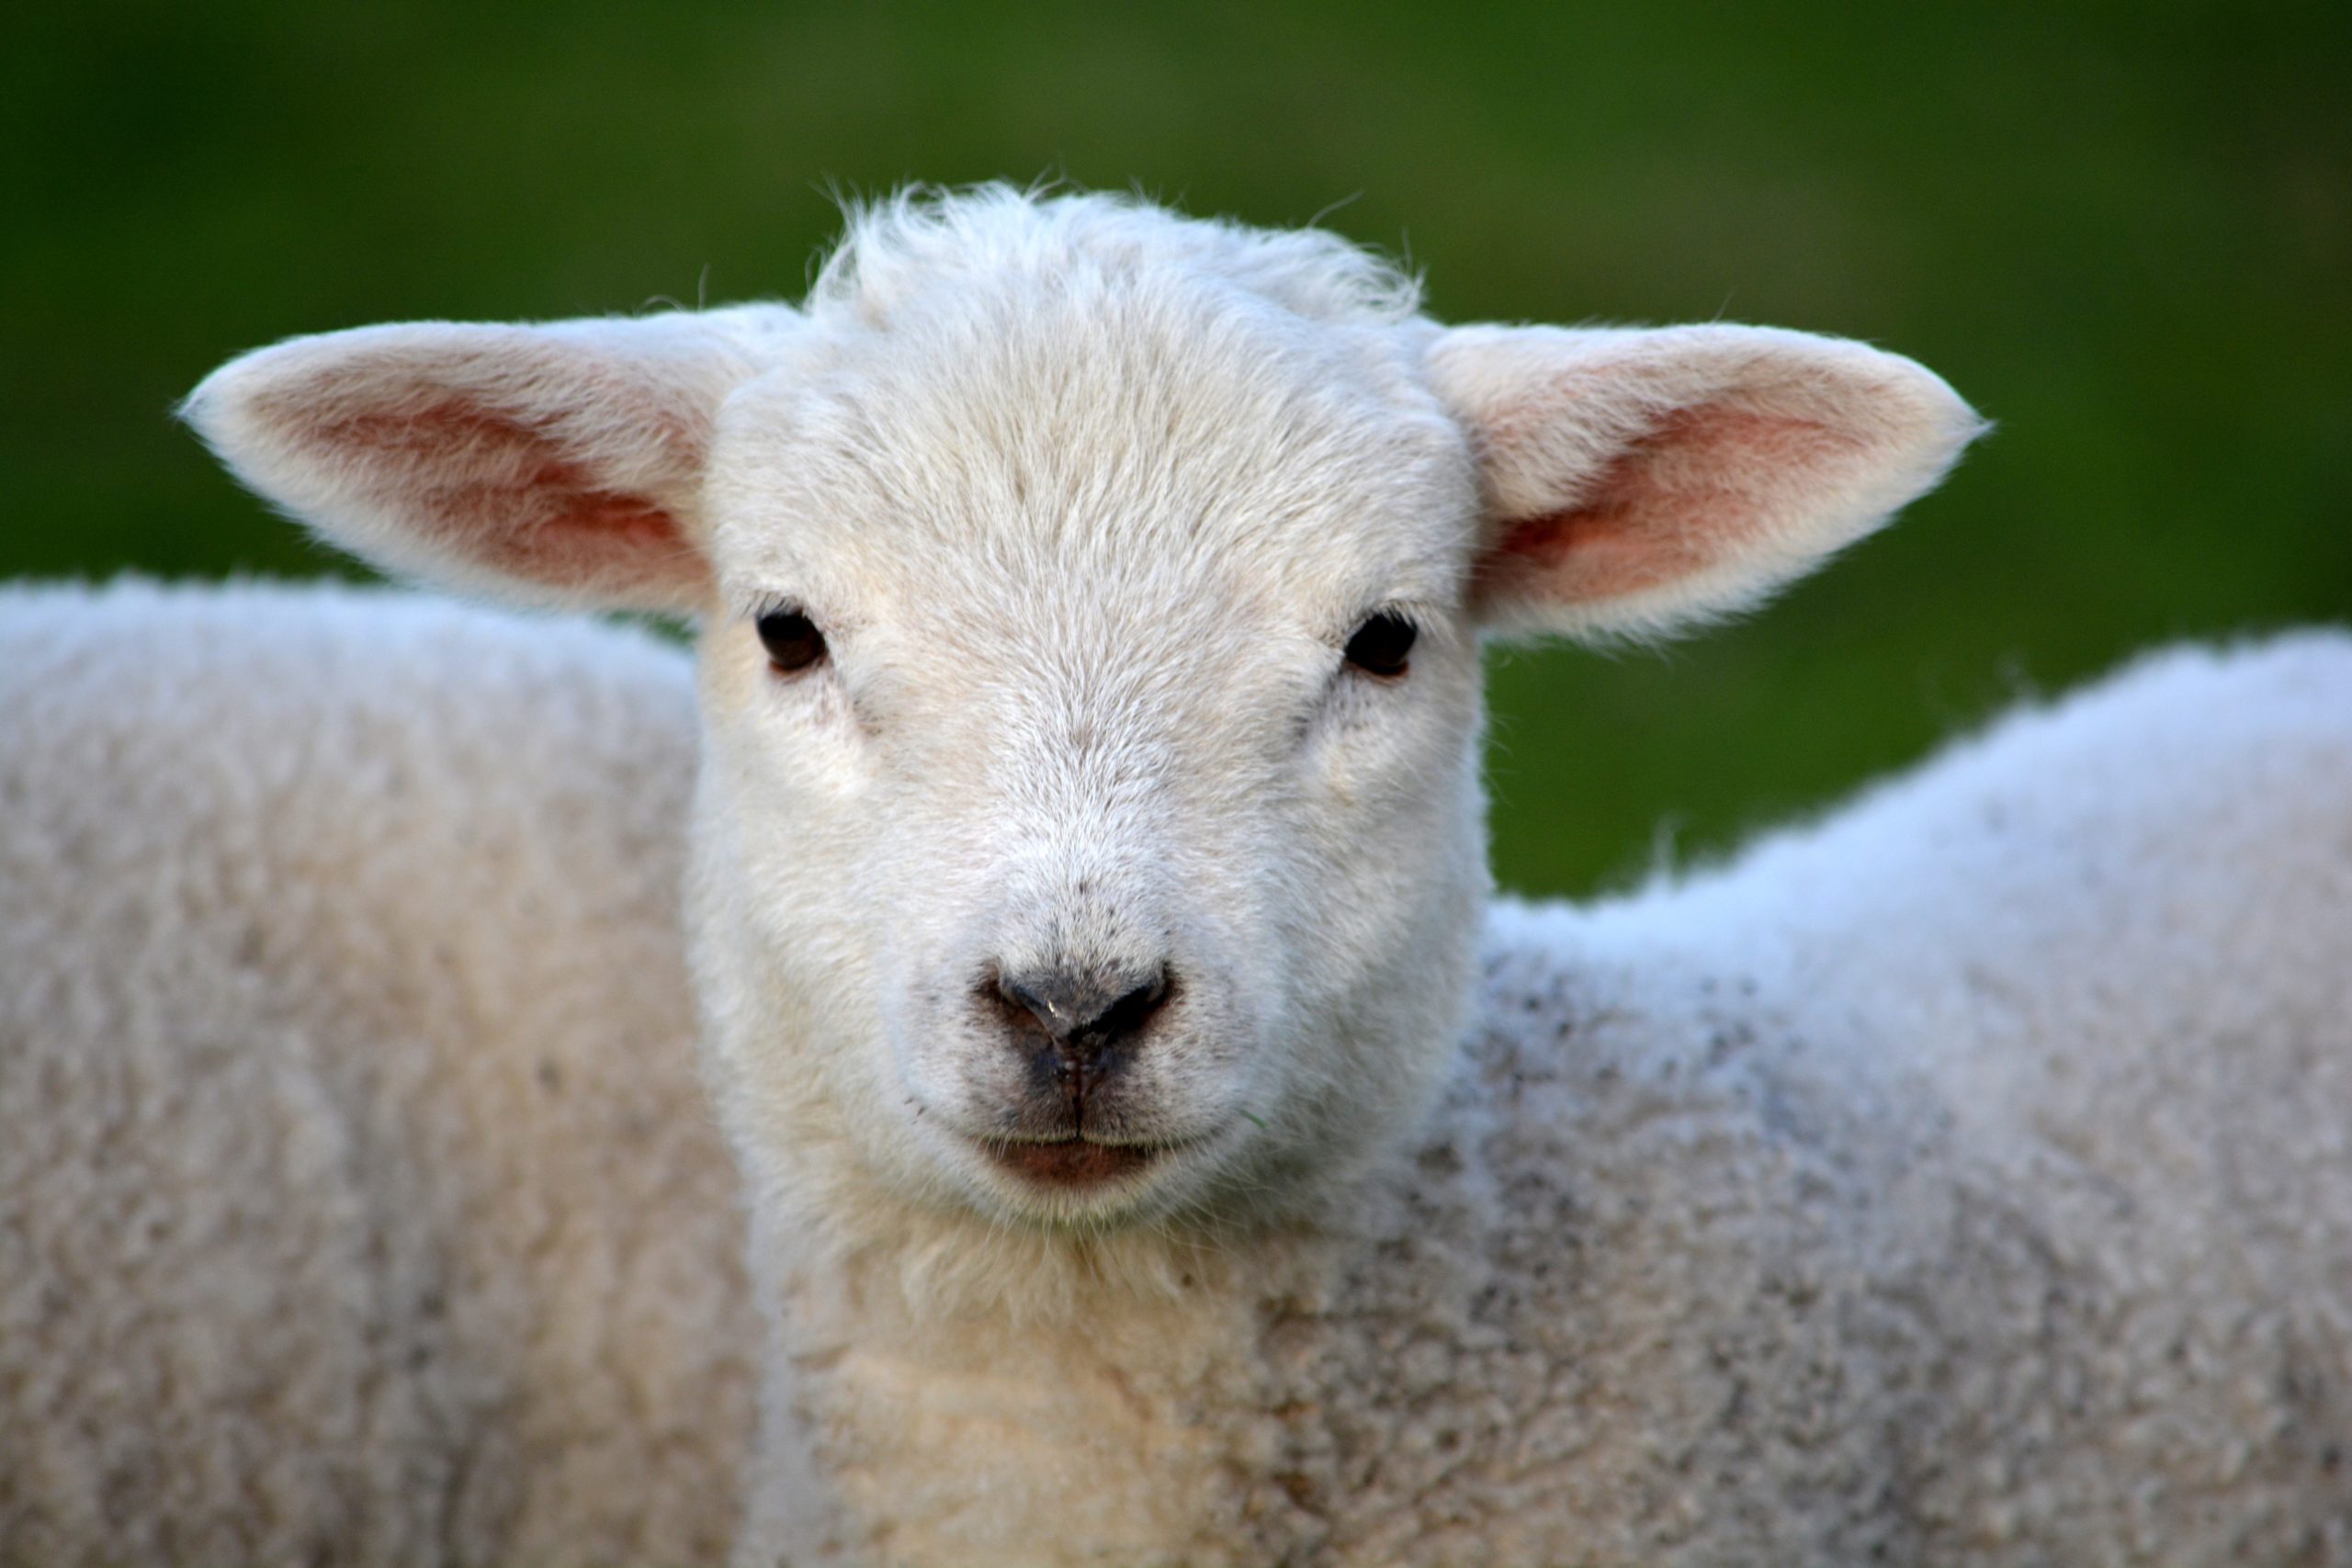 An alert white lamb facing the photographer.